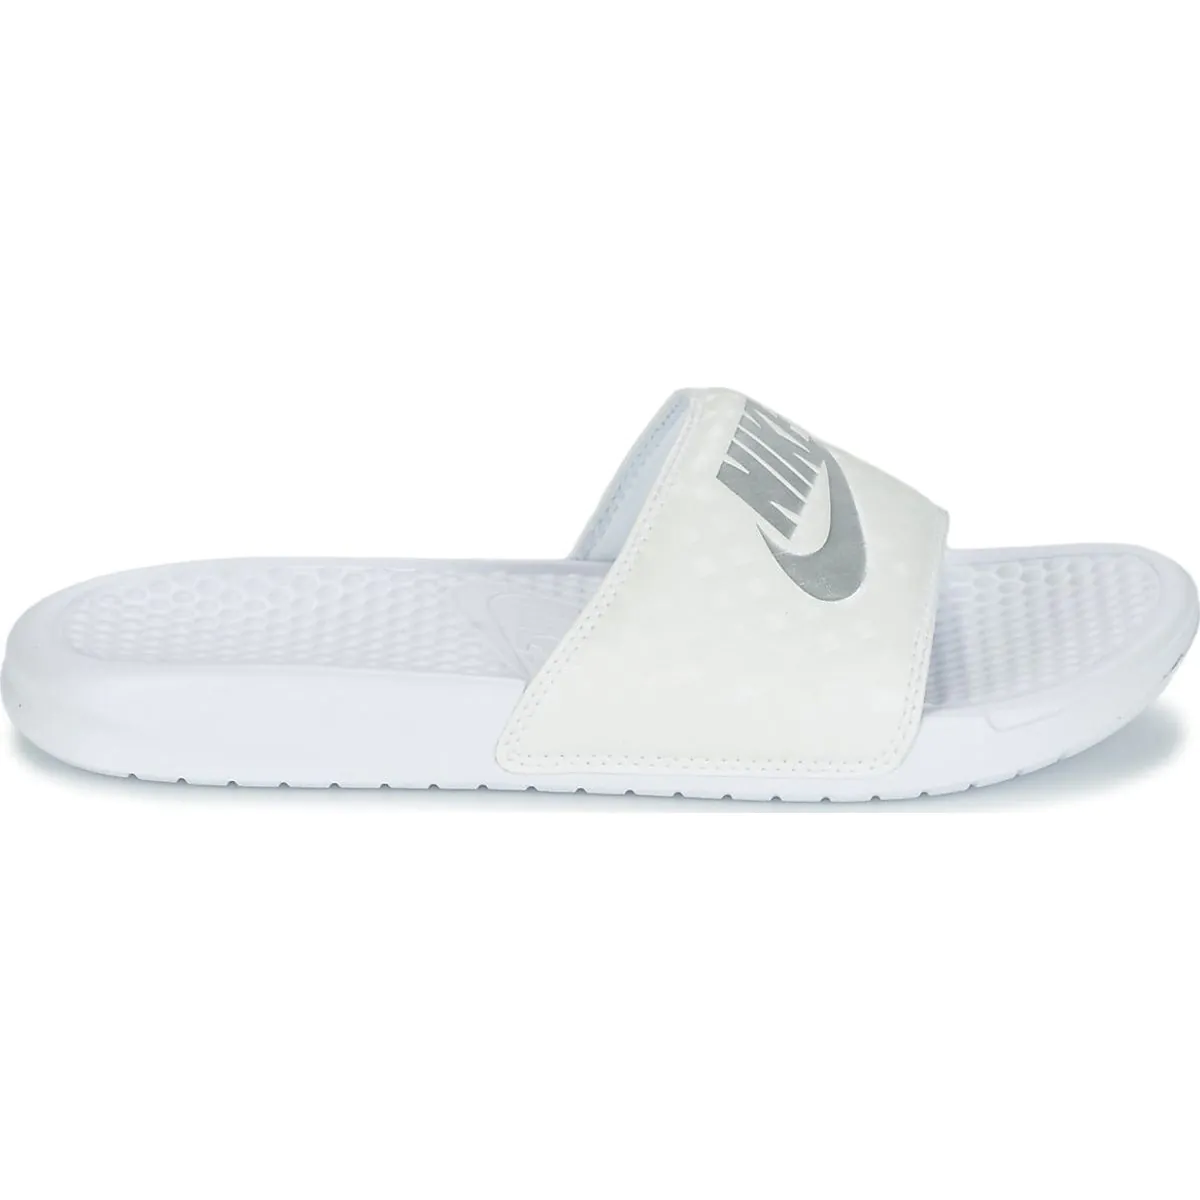 Nike Benassi Just Do It Print Women's Slippers 343881-102